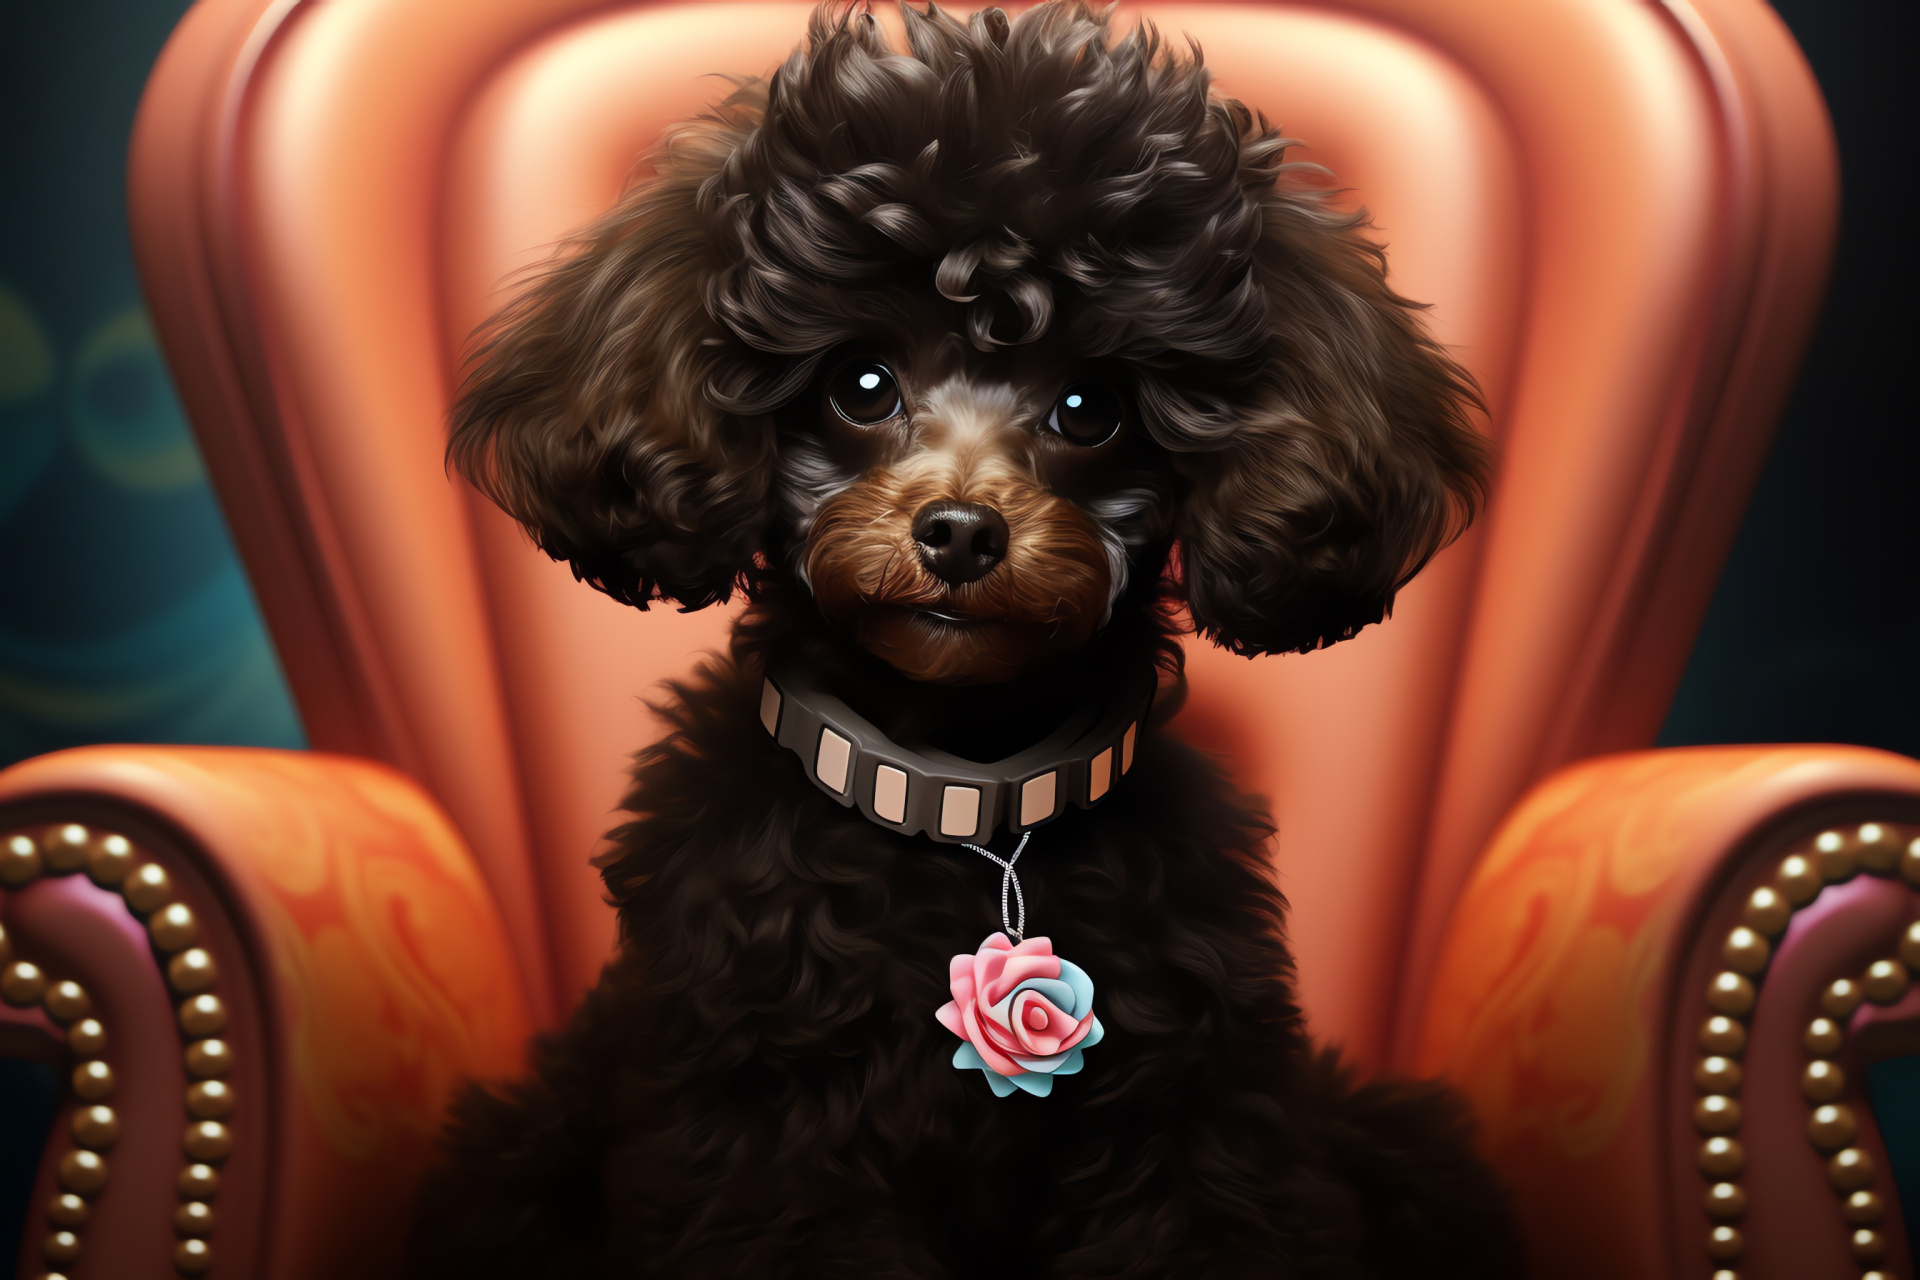 Toy Poodle luxury, canine on furniture, sleek dark fur, pampered pet, stylish animal, HD Desktop Image